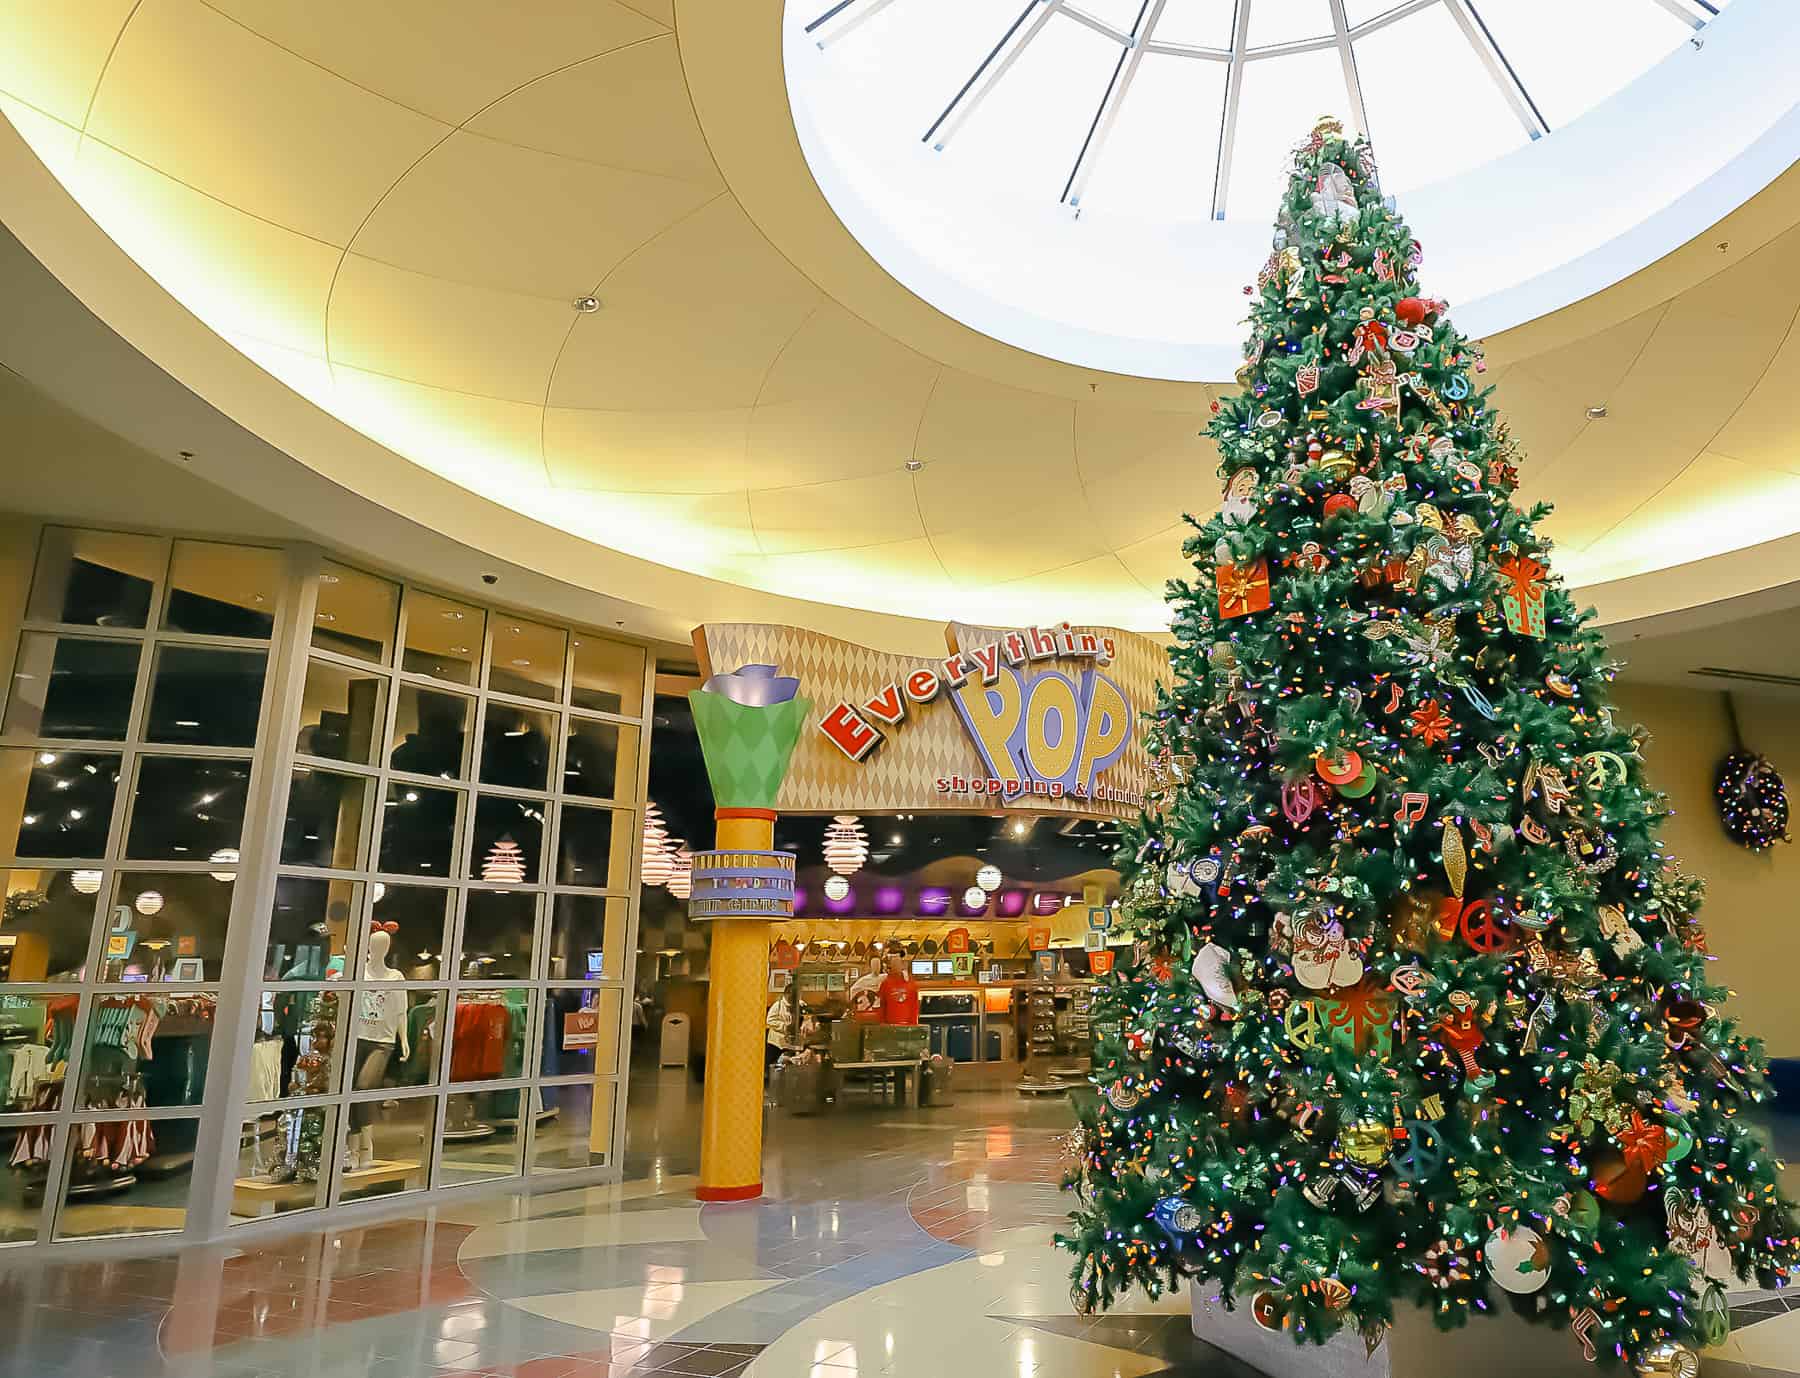 The Christmas tree in the lobby of Disney's Pop Century 